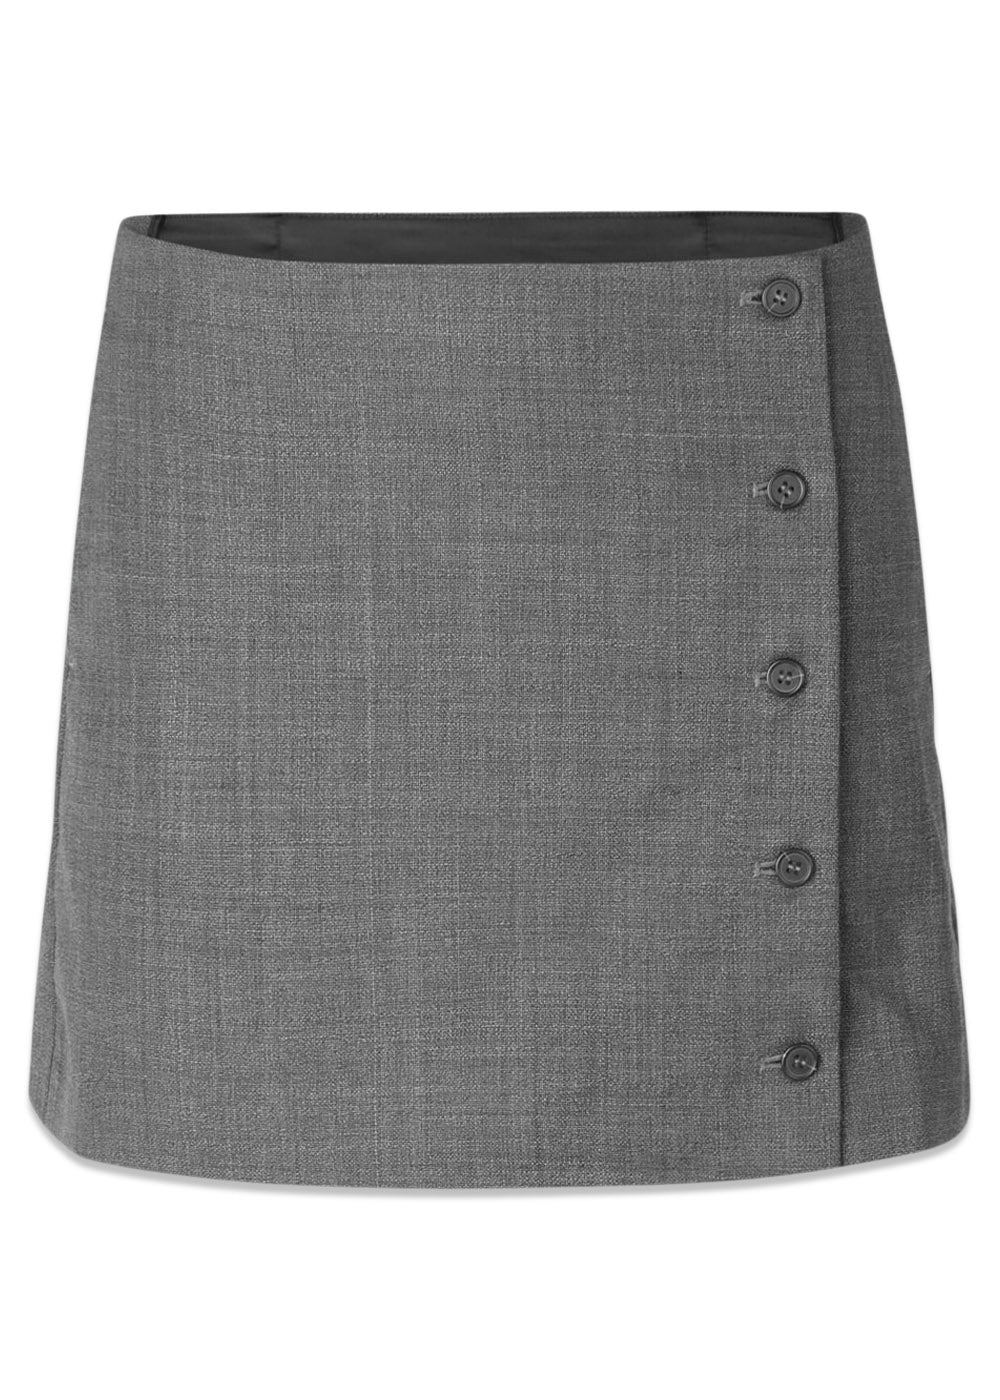 The Garments Windsor Mini Skirt - 602. Køb skirts her.